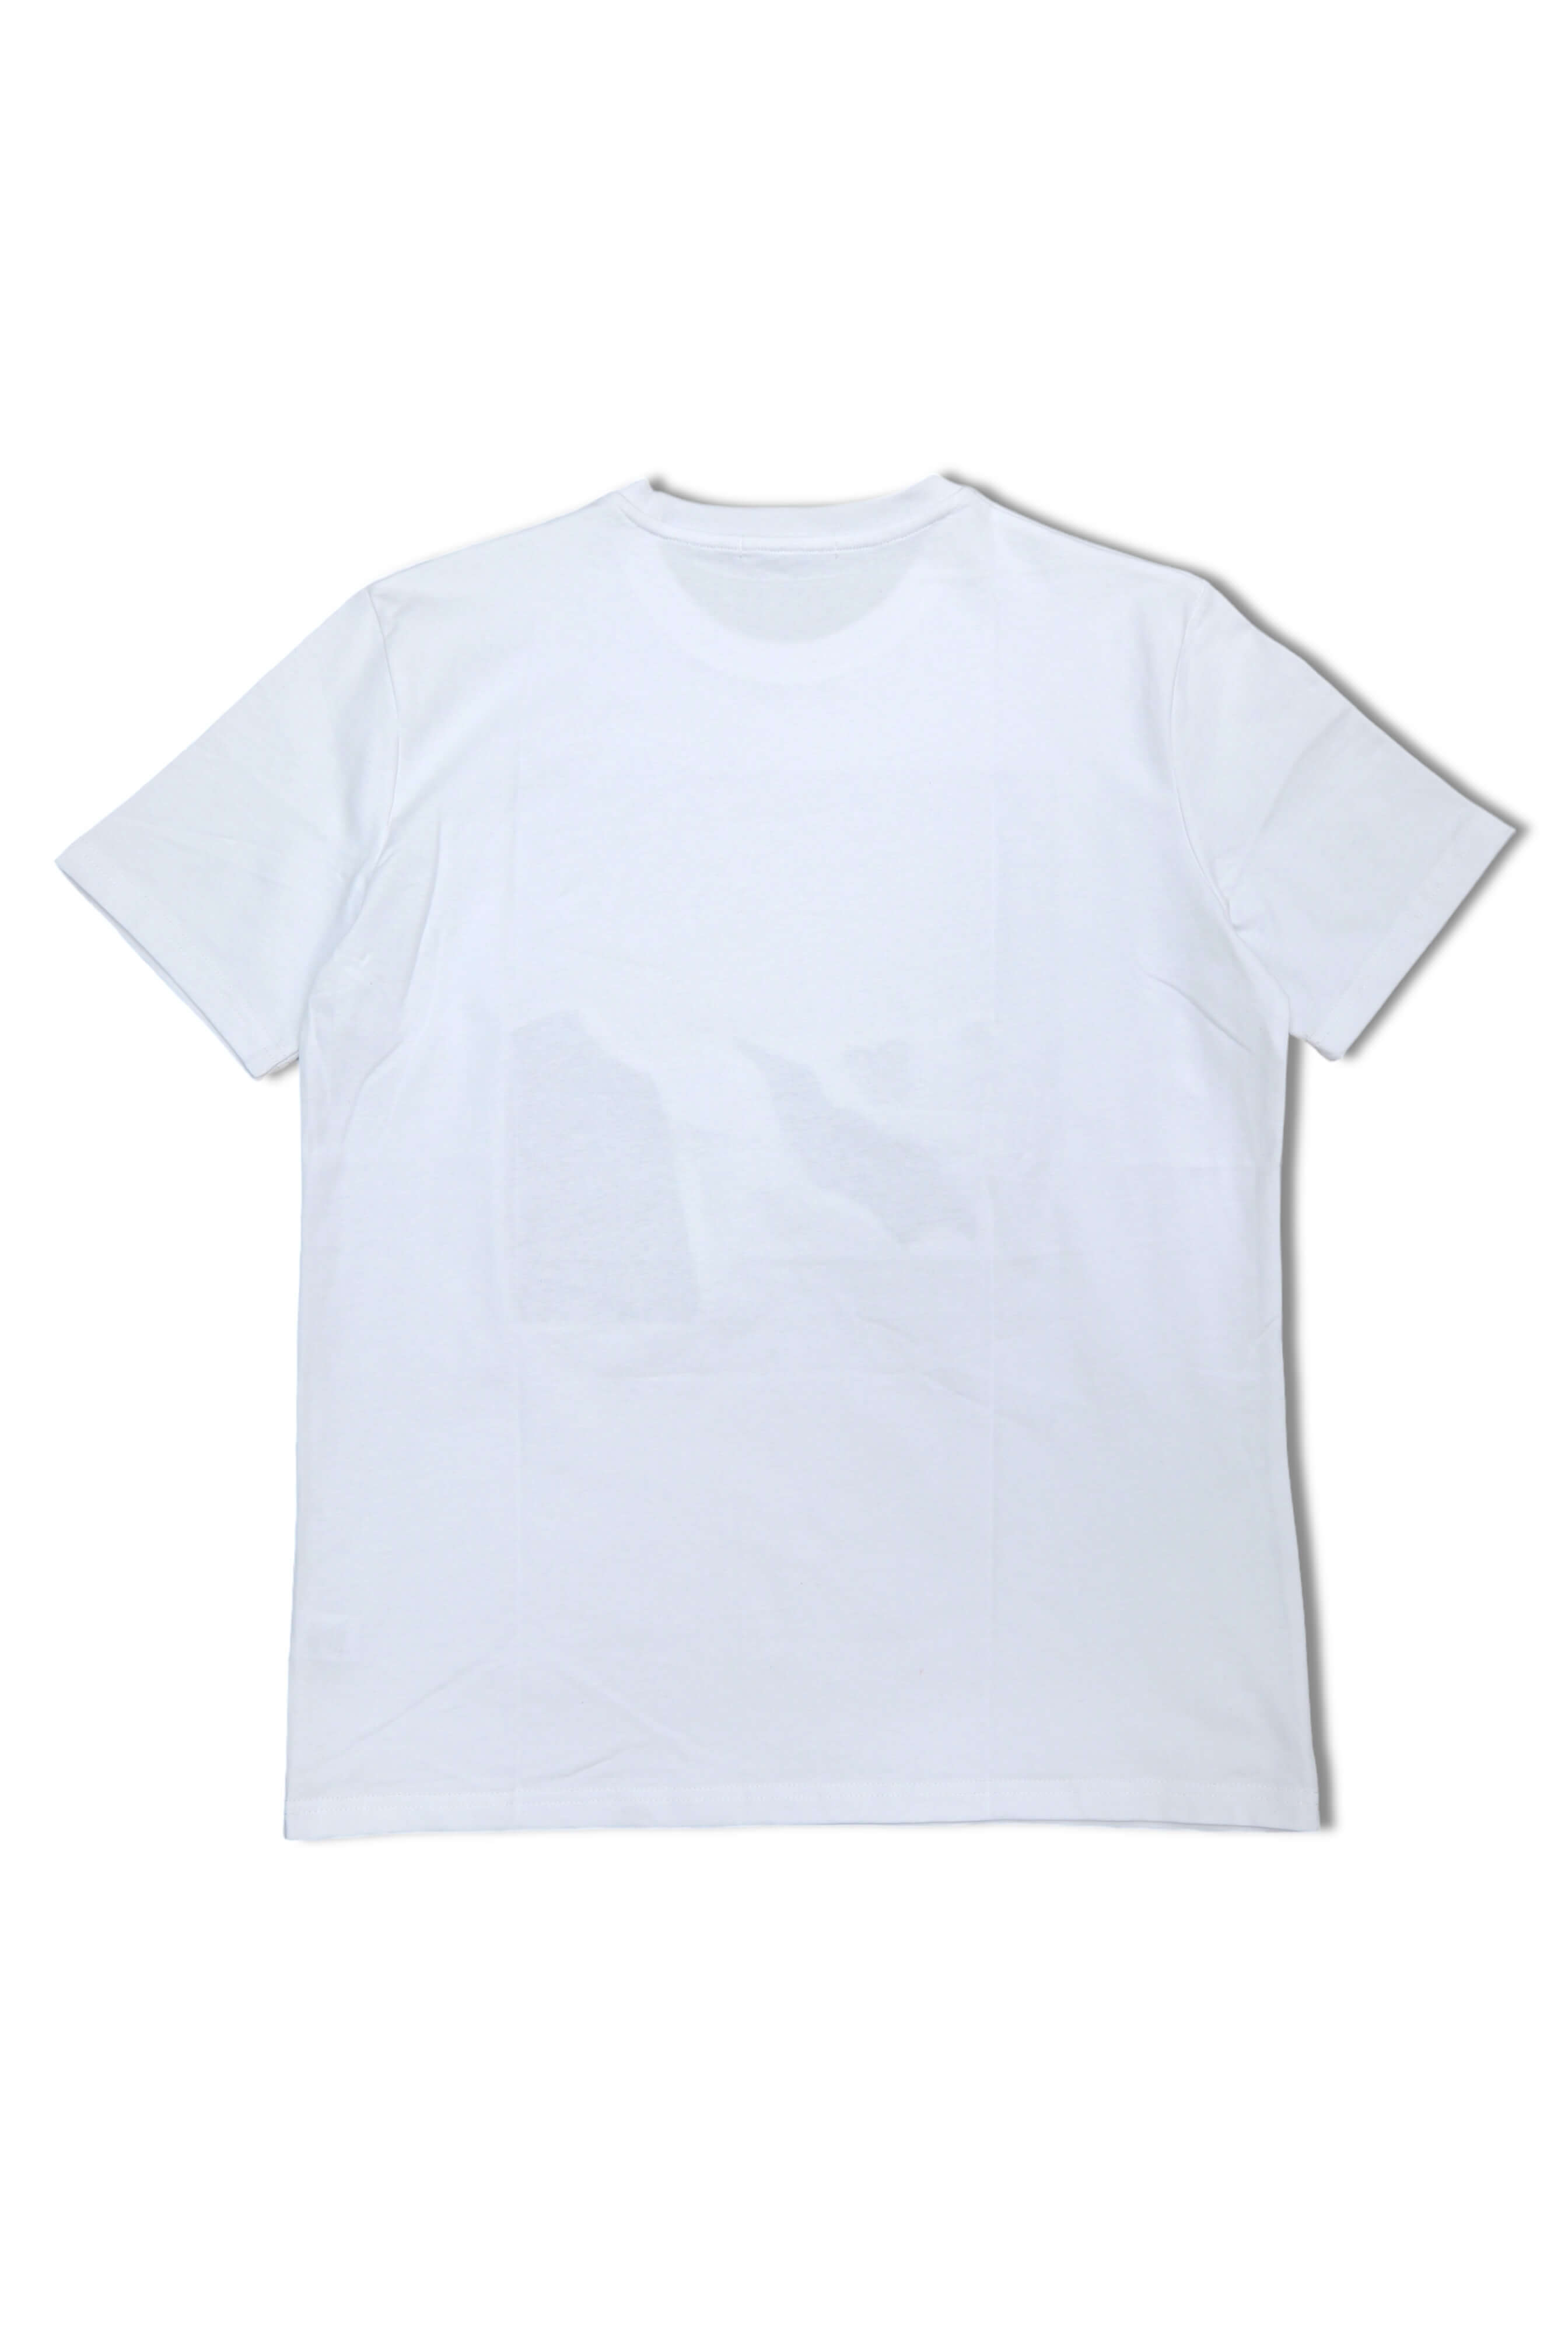 Black Planet- Pop Smoke and Virgil T-shirt- White